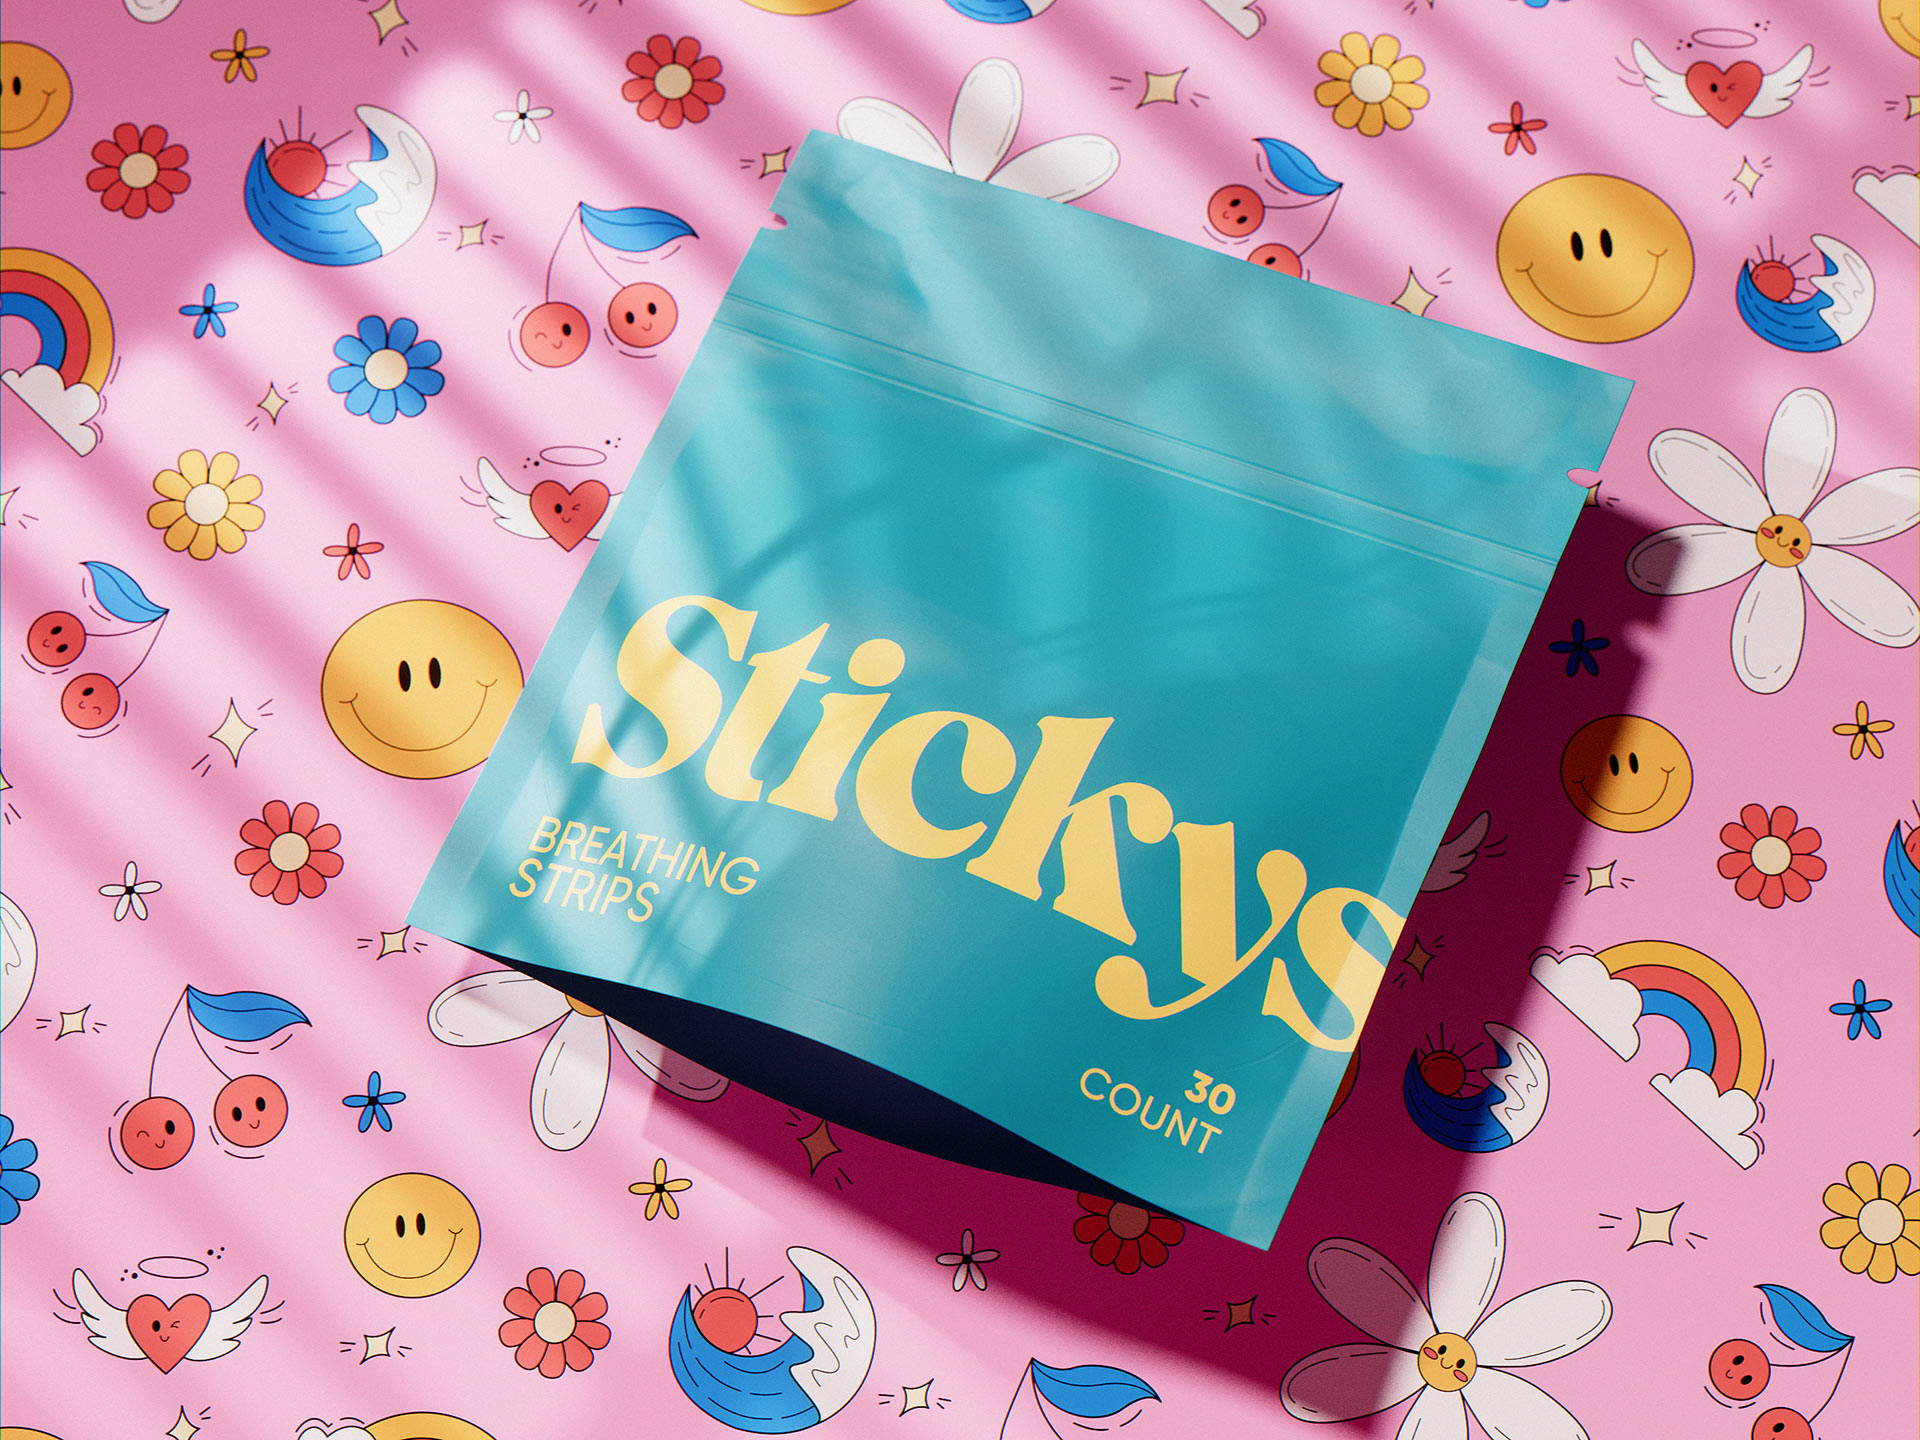 Stickys image